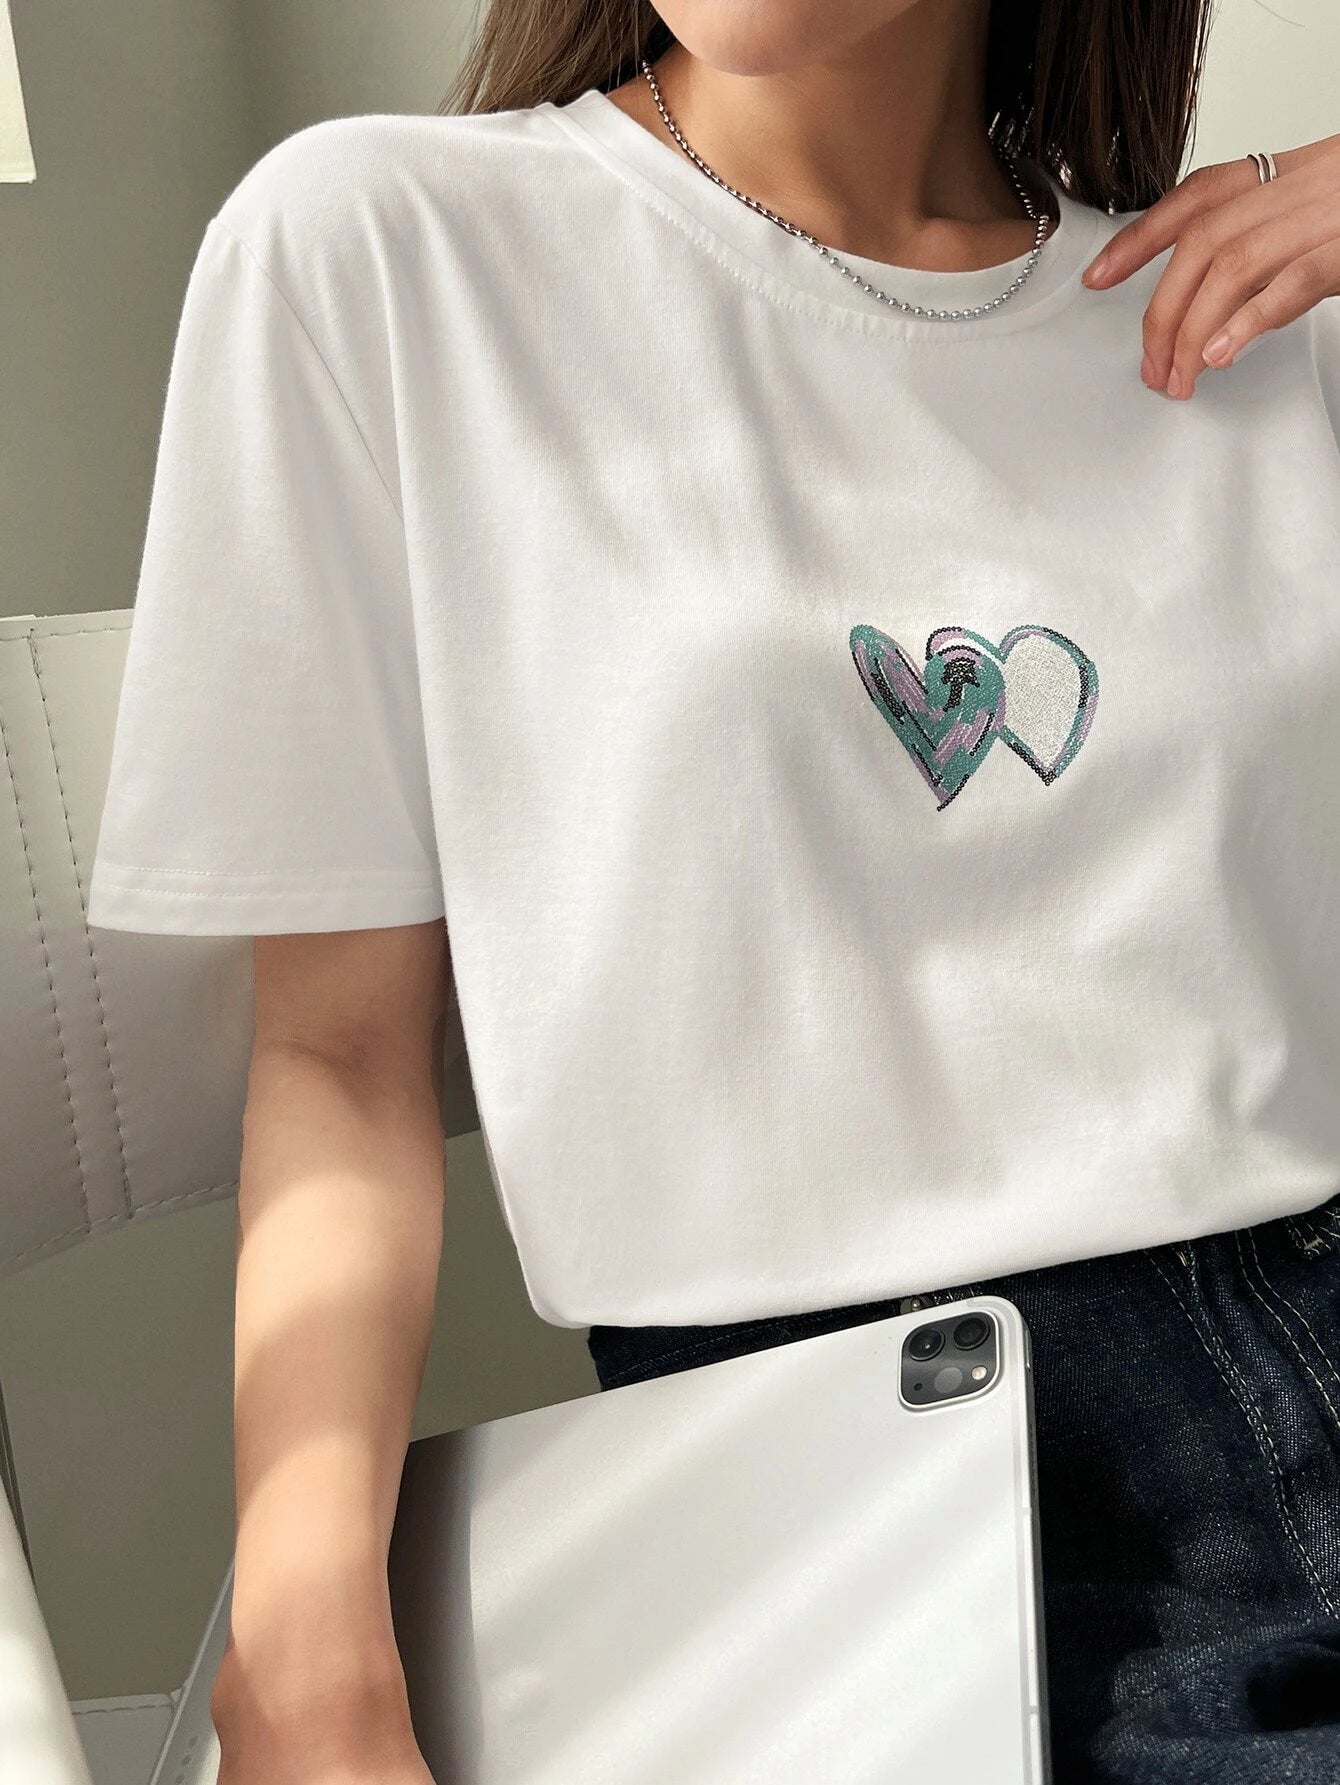 Camiseta Feminina Coração Estiloso Casual